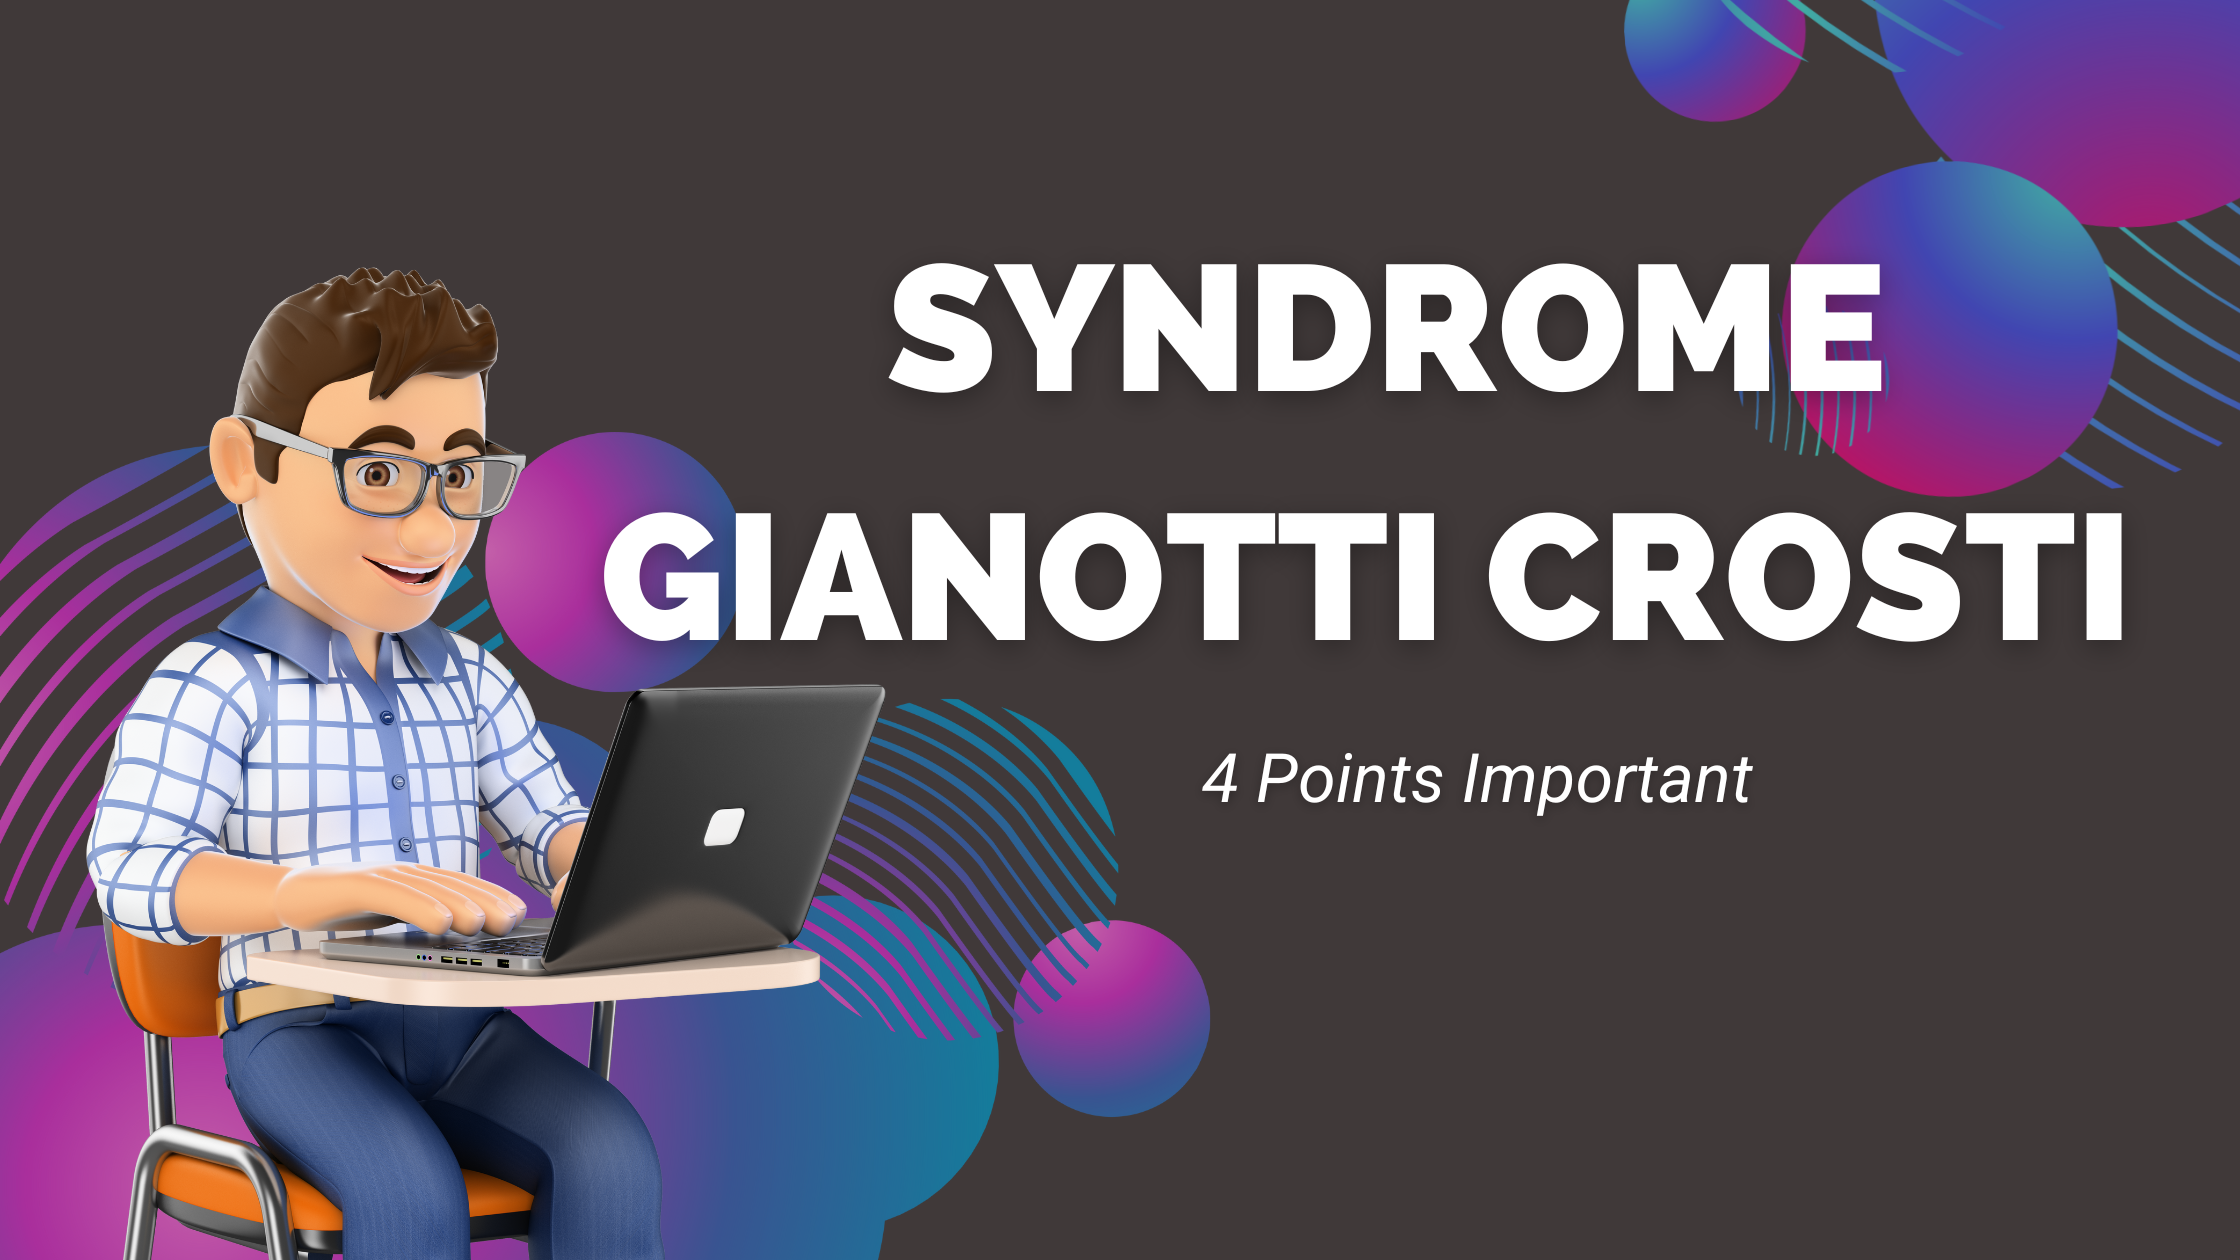 Syndrome Gianotti Crosti  | 4 Points Important